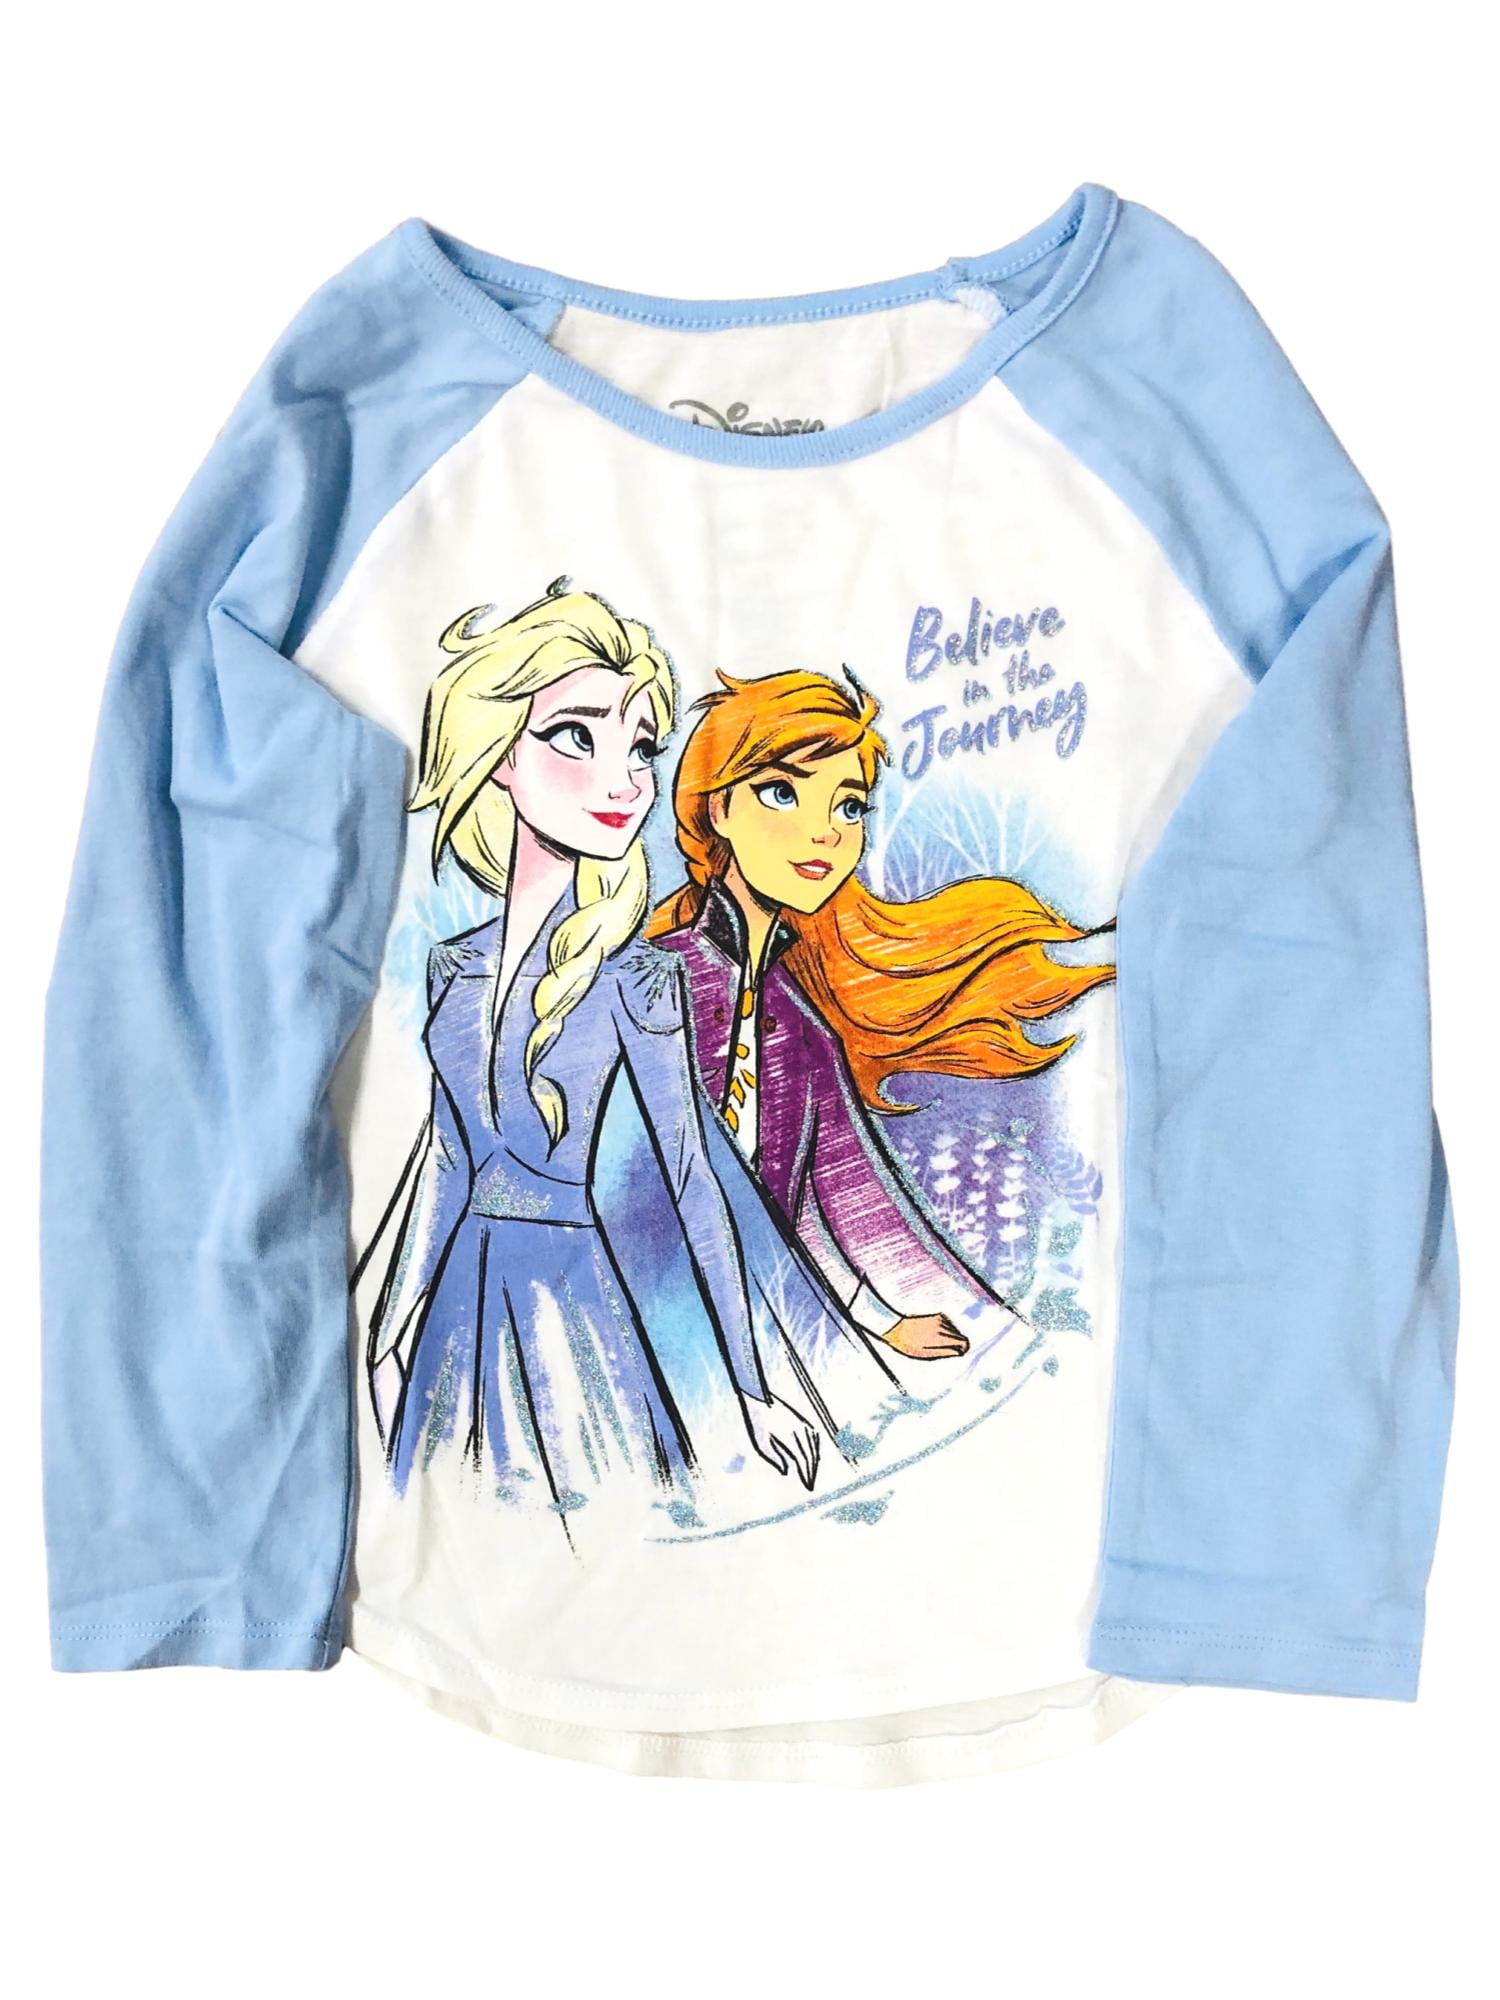 Toddler T-Shirt Frozen Girls The Journey Tee Disney Elsa Shirt In 3T Believe